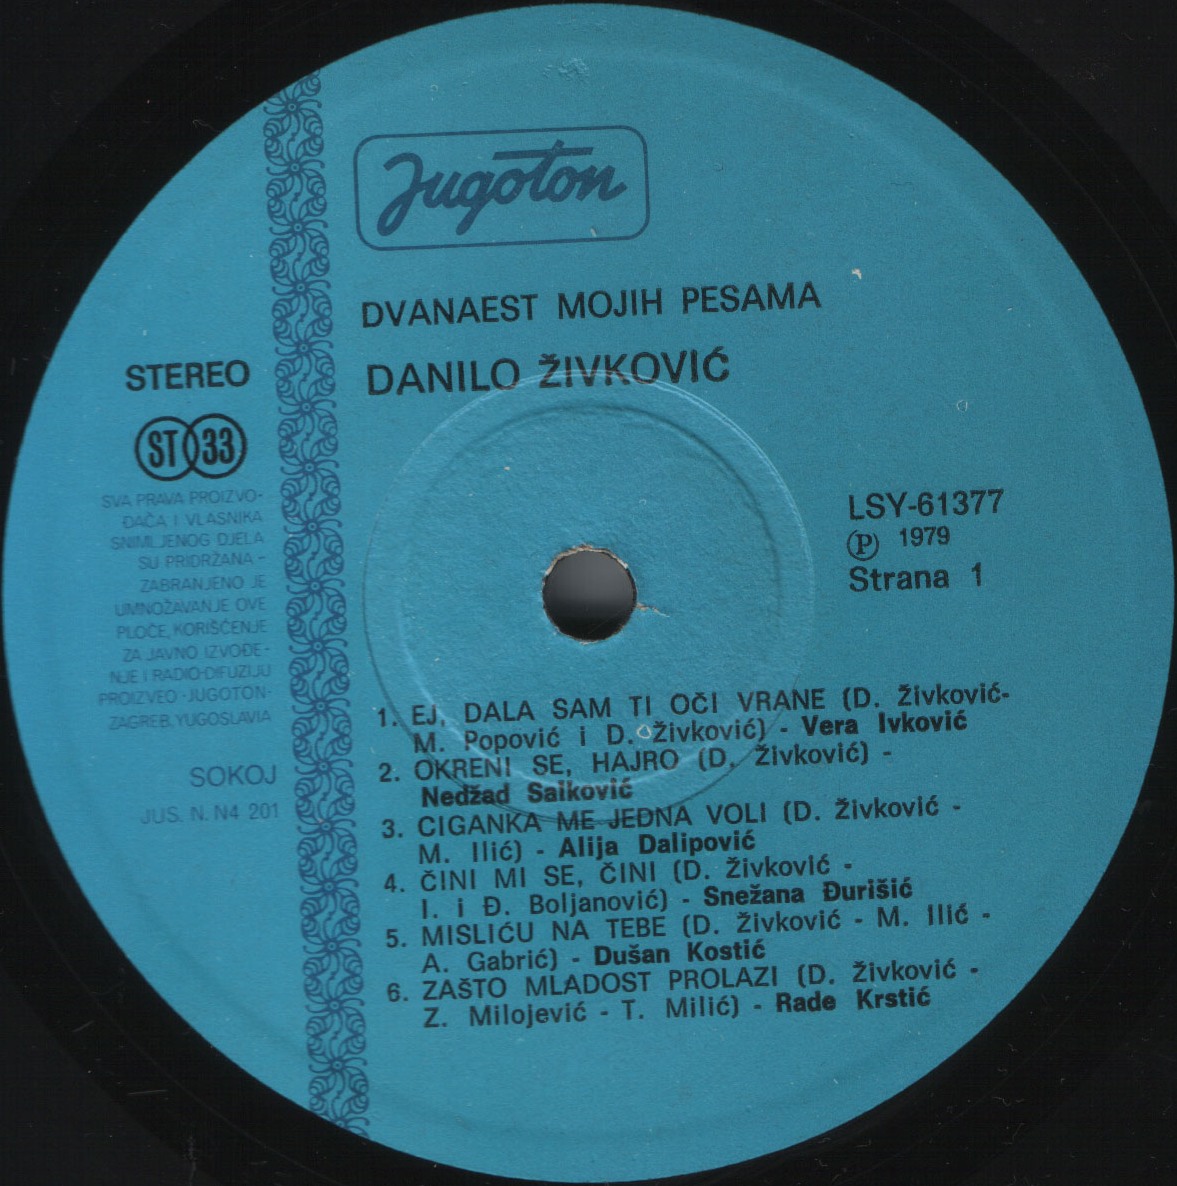 Danilo Zivkovic 1979 A